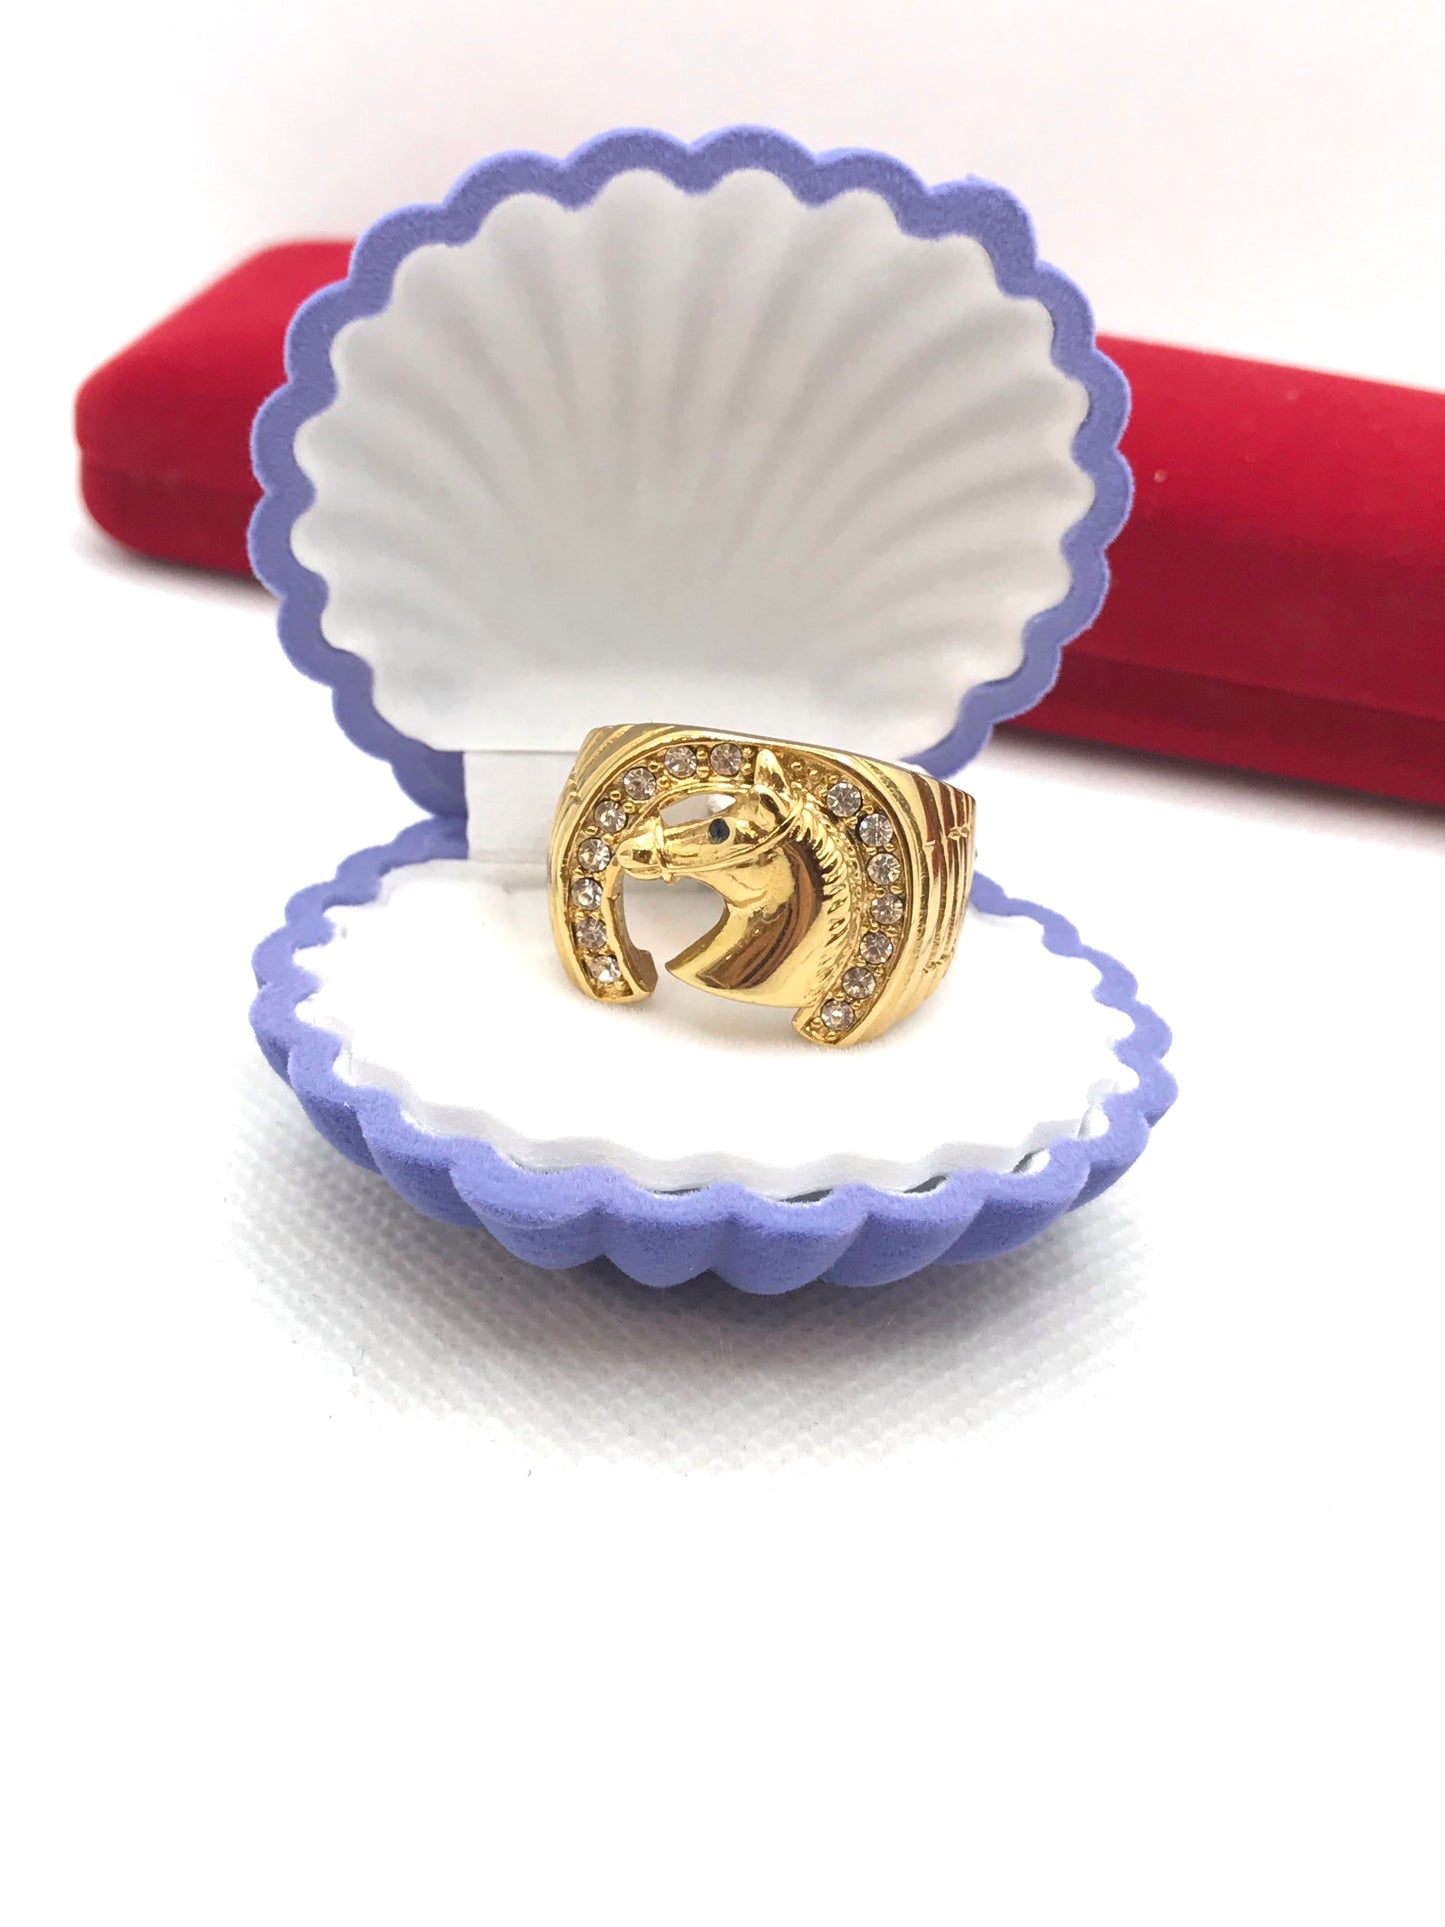 Gold plated horseshoe design ring